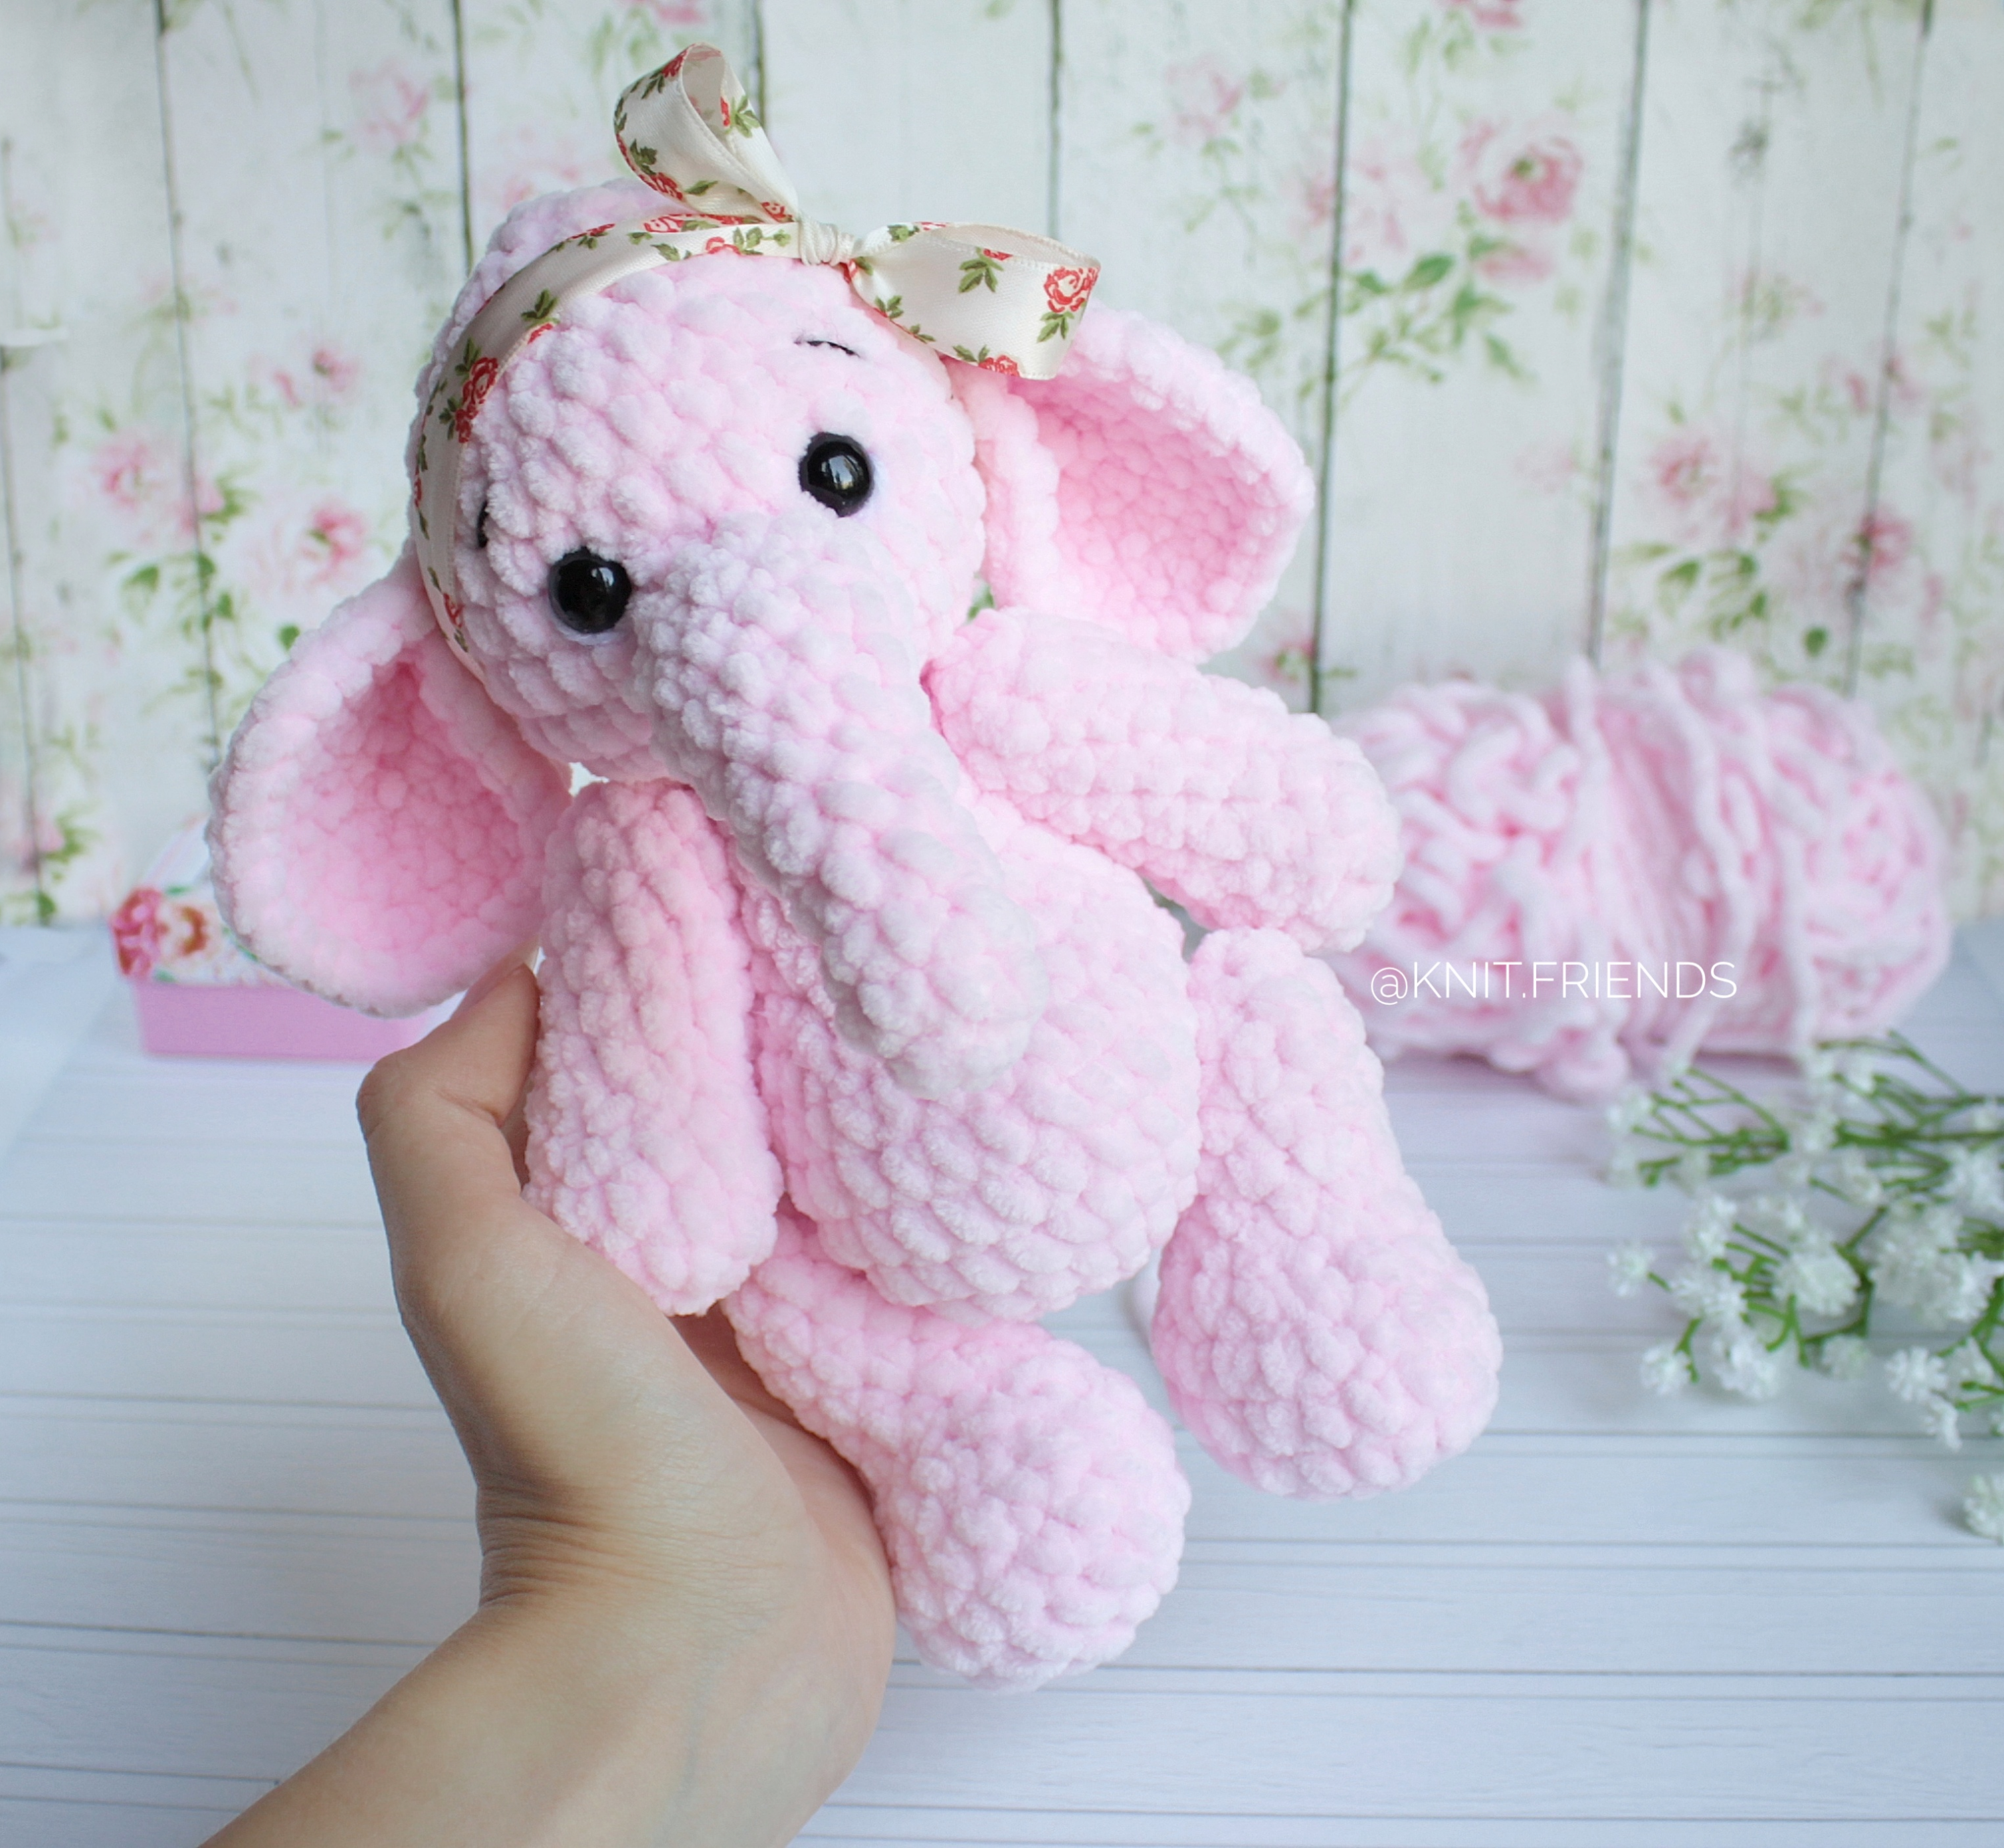 Childs Crocheted Stuffed Amigurumi Toy Animal Plush Elephant Collectable